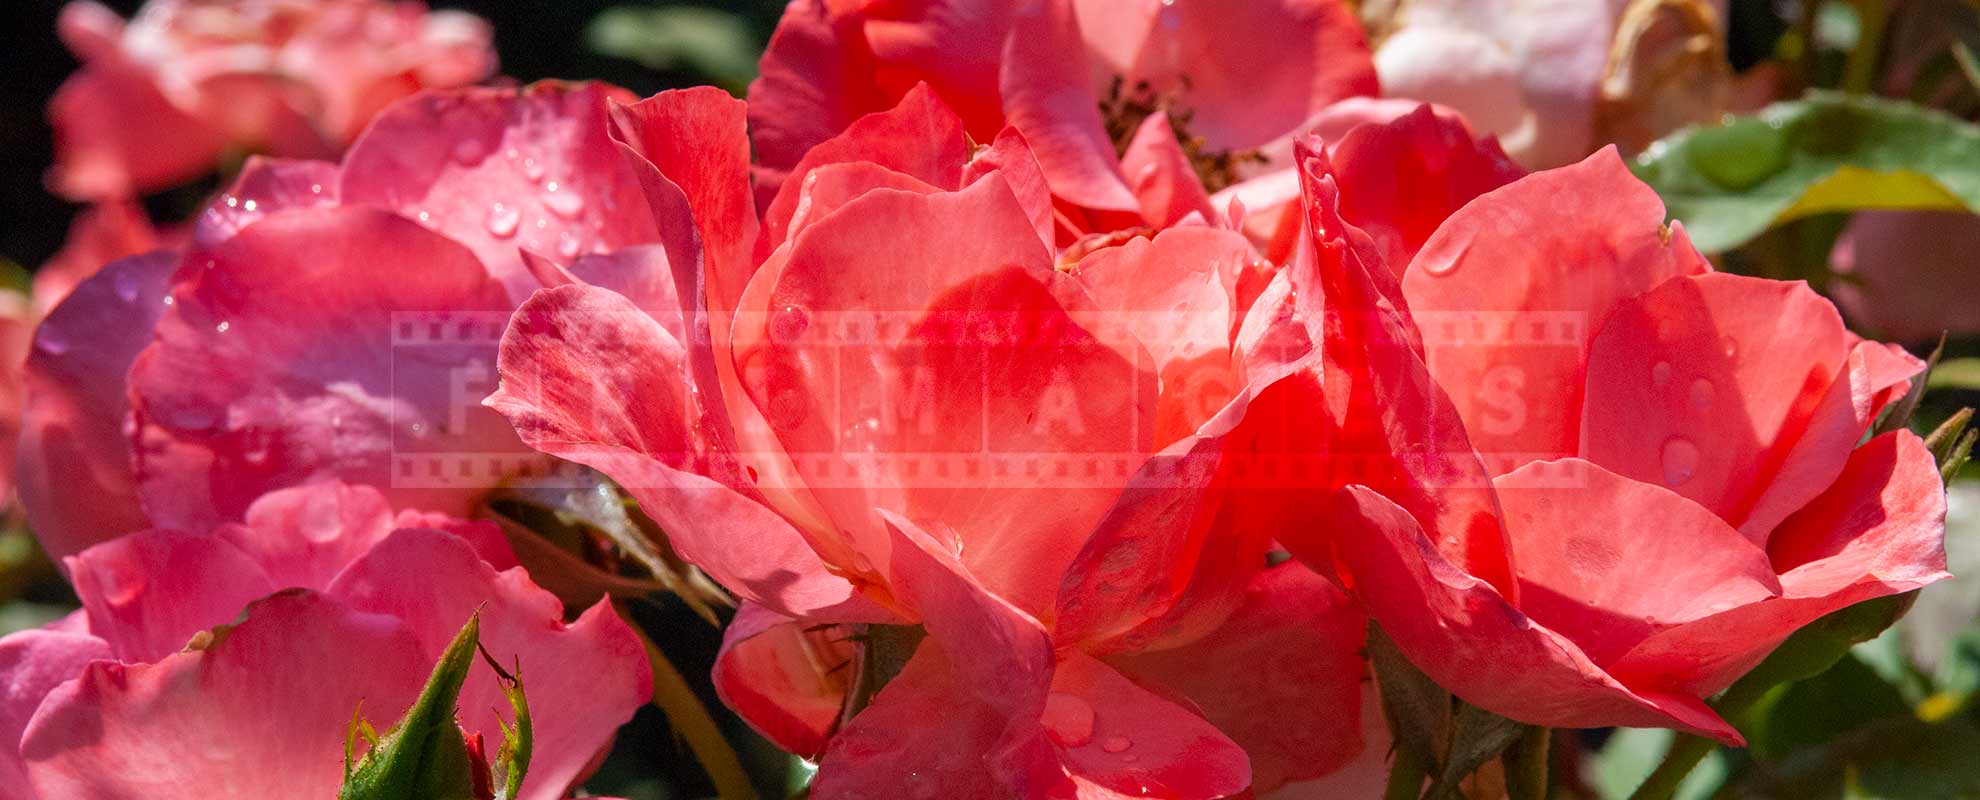 Close up image of pink floribunda roses bunch with water droplets